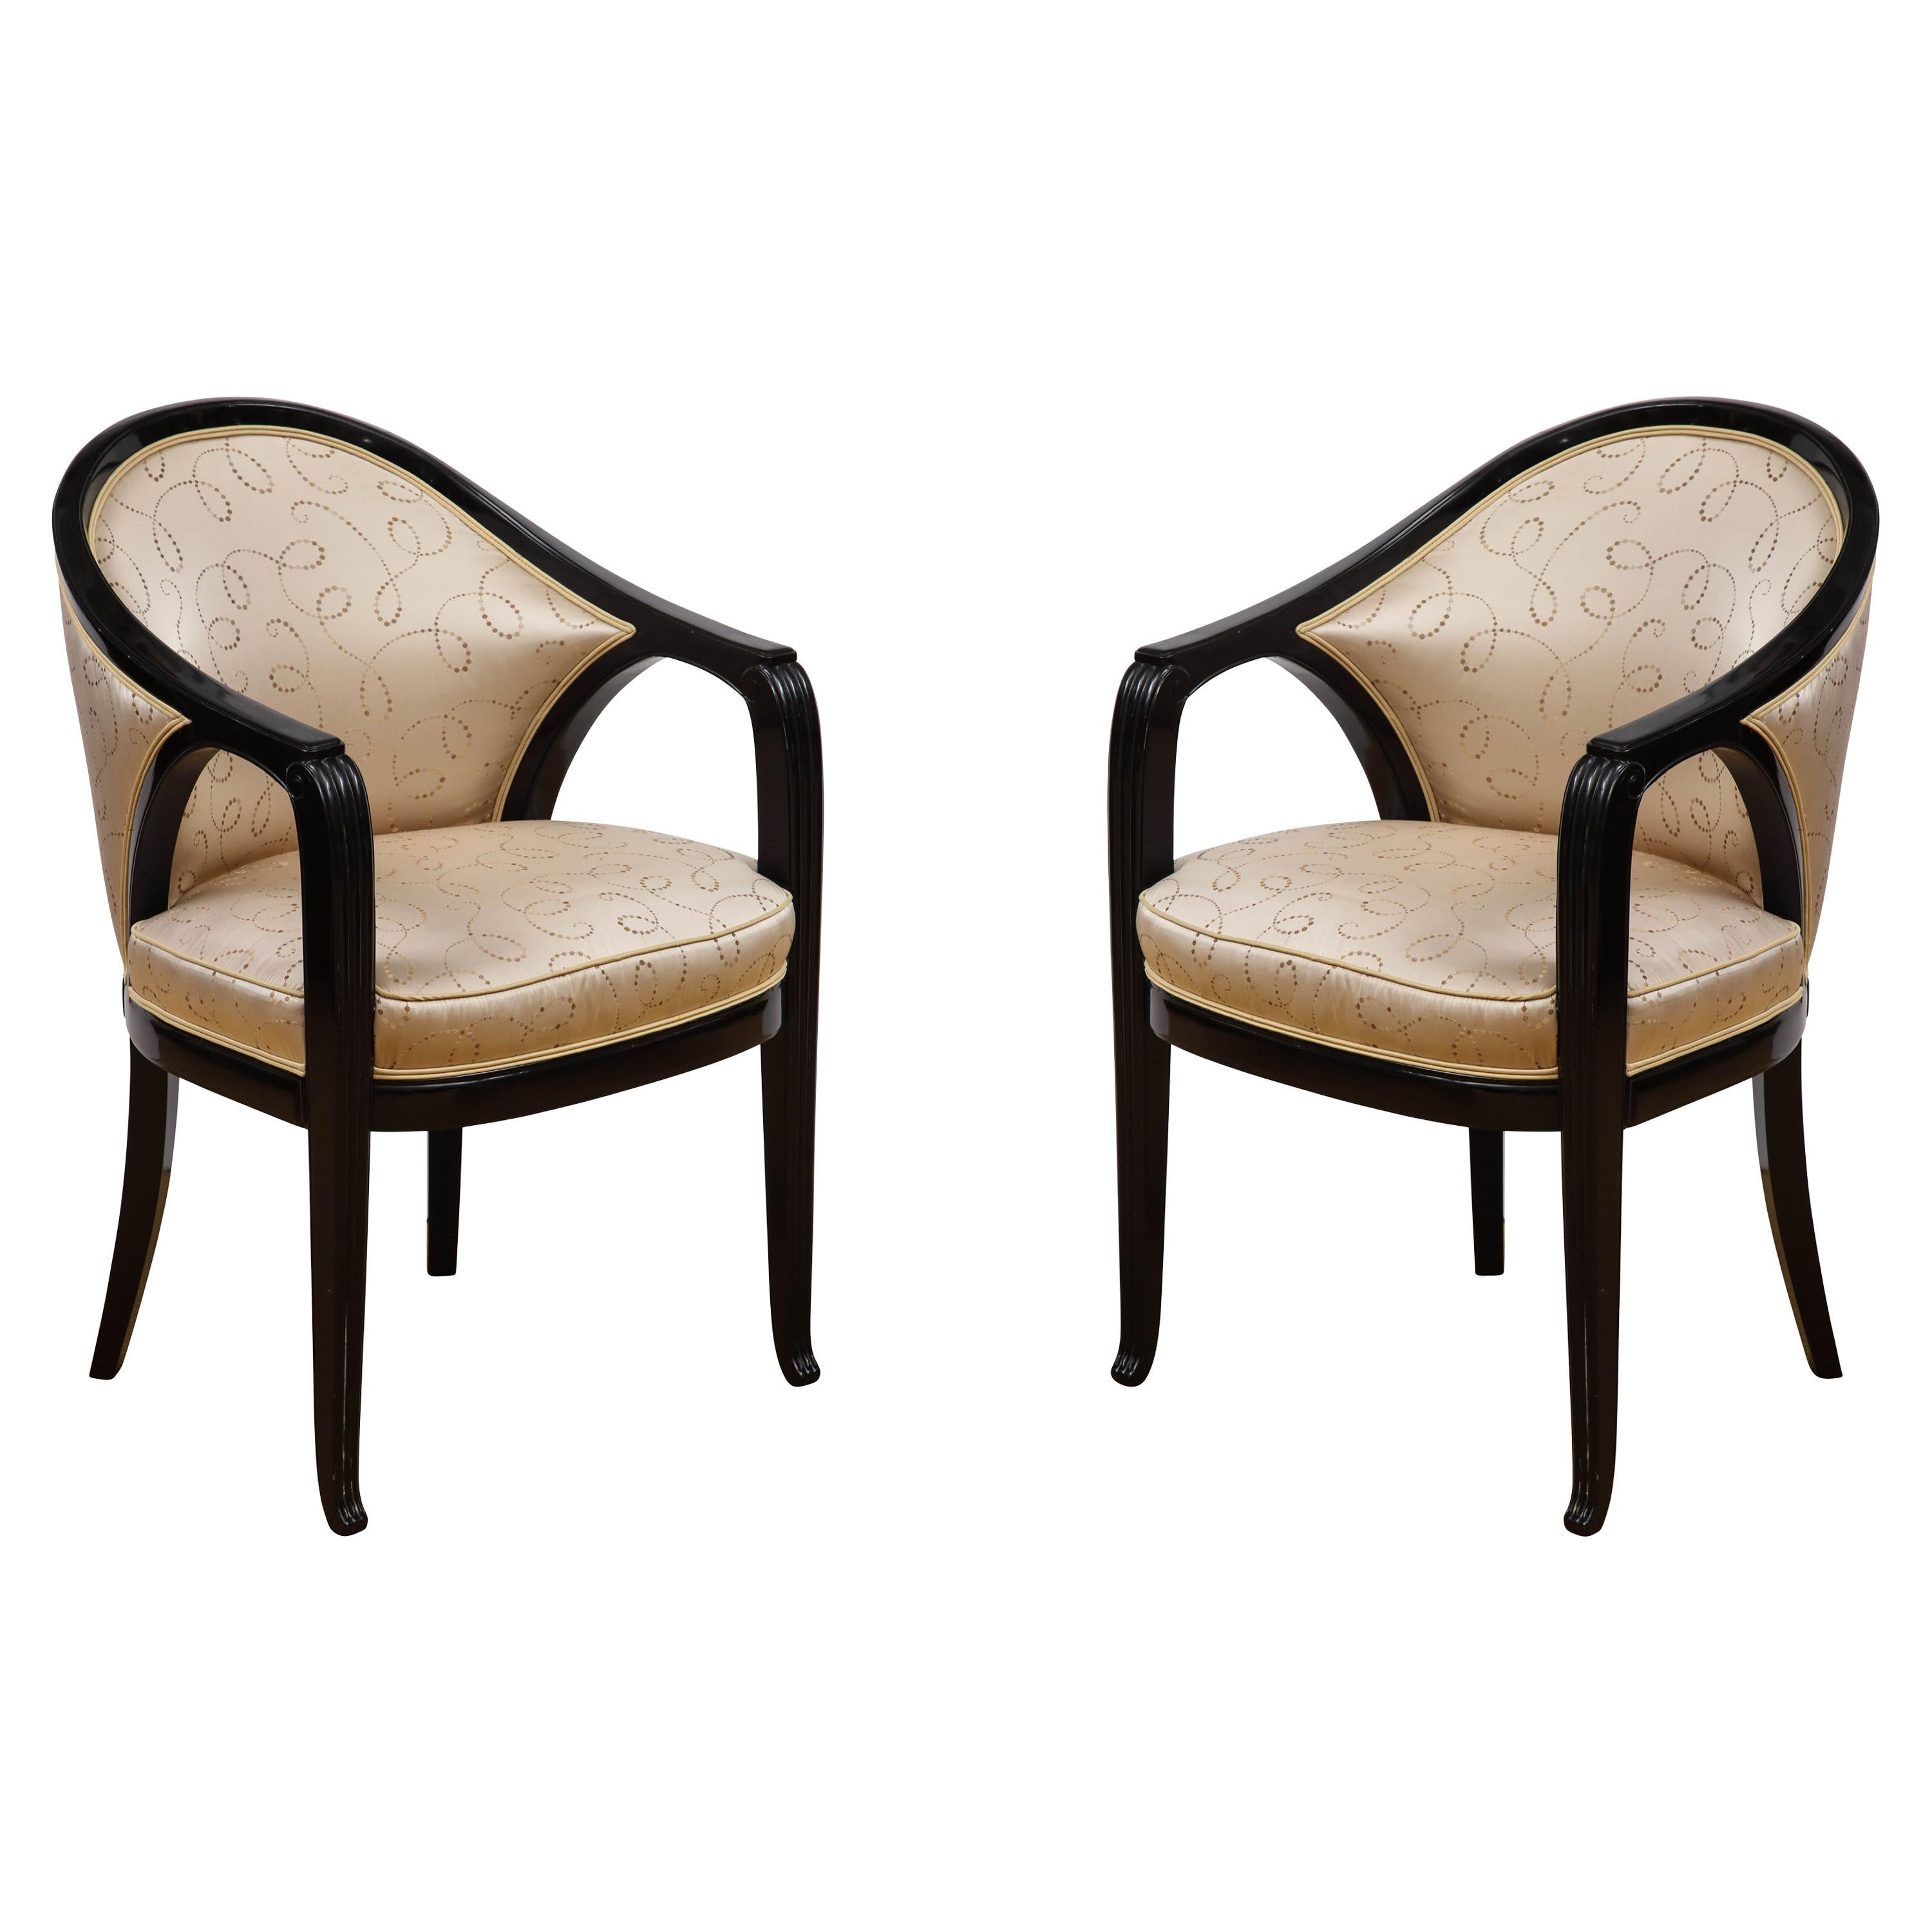 Pair of Ebonized Chairs by Paul Follot